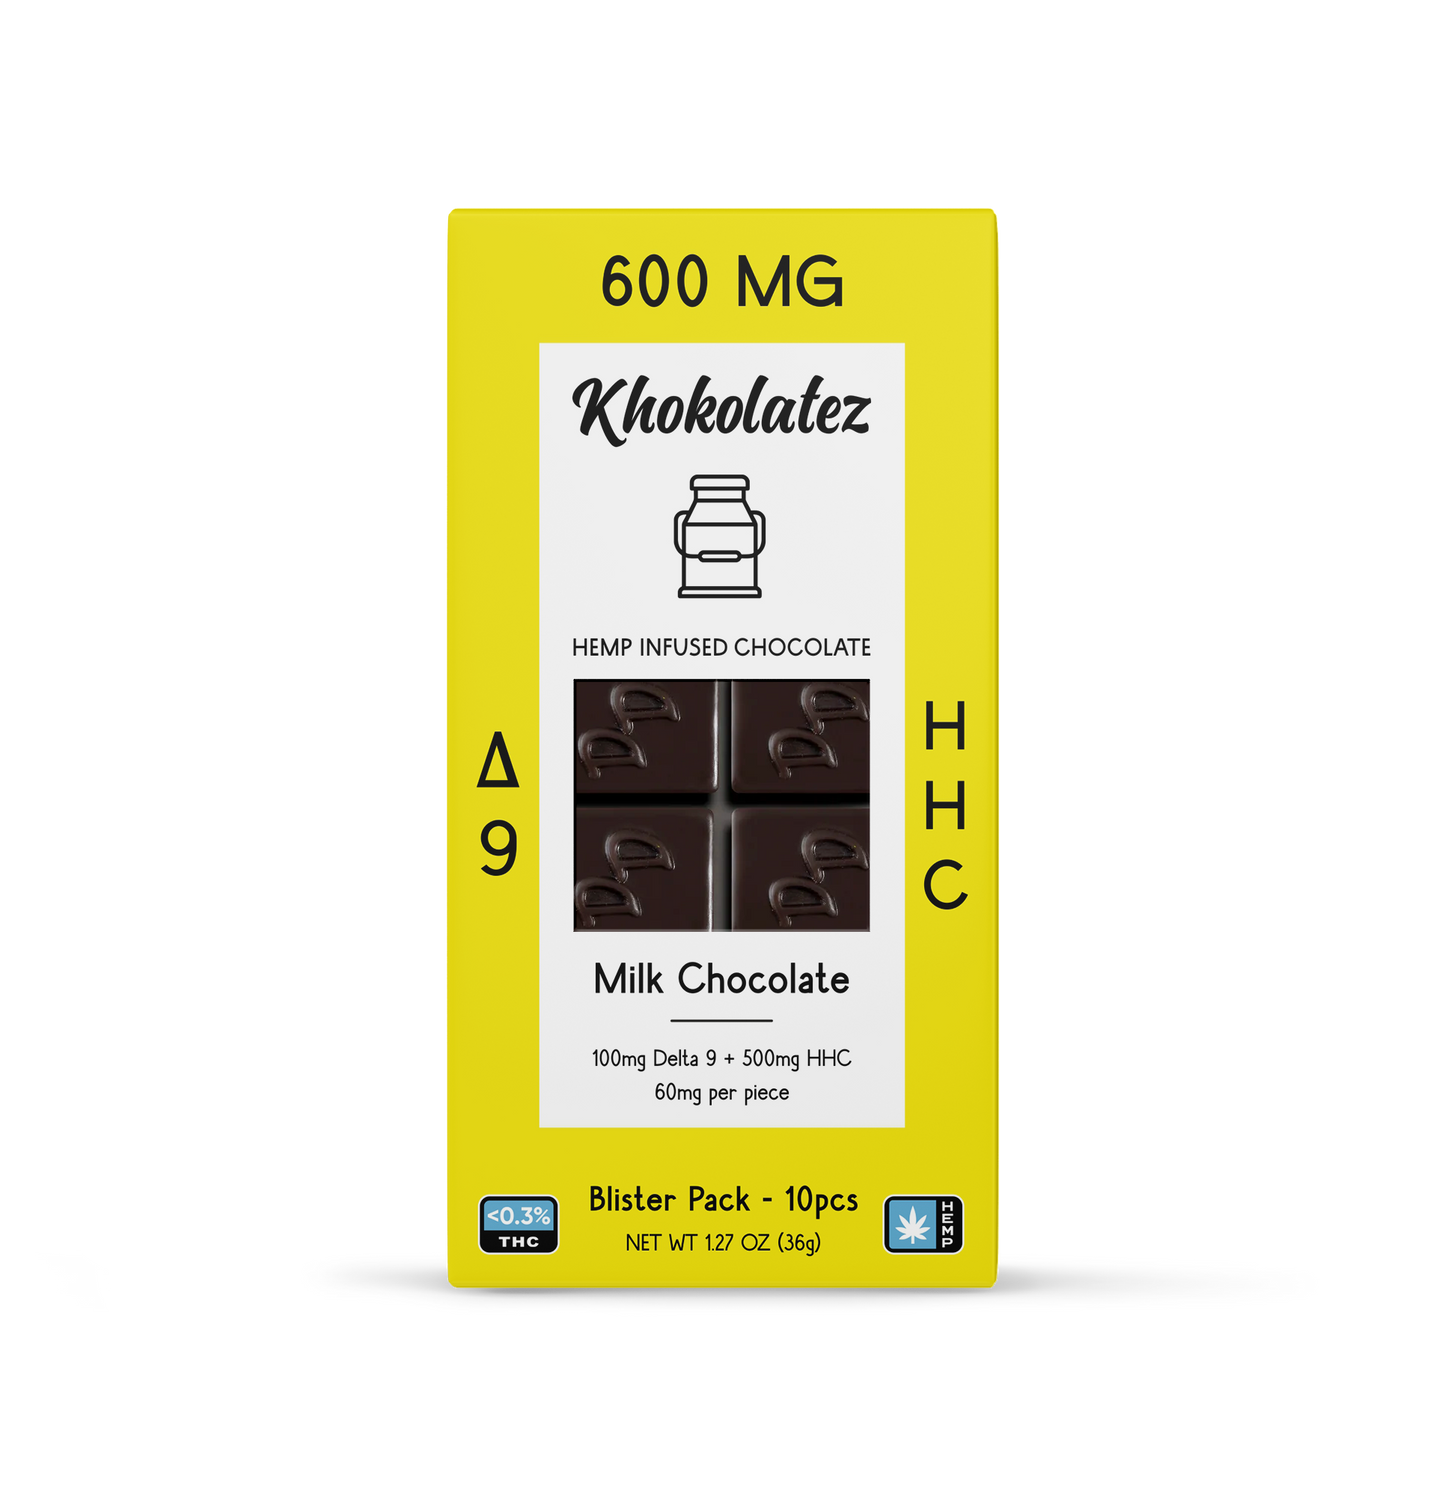 Khokolatez Delta 9 + HHC Chocolates - Box